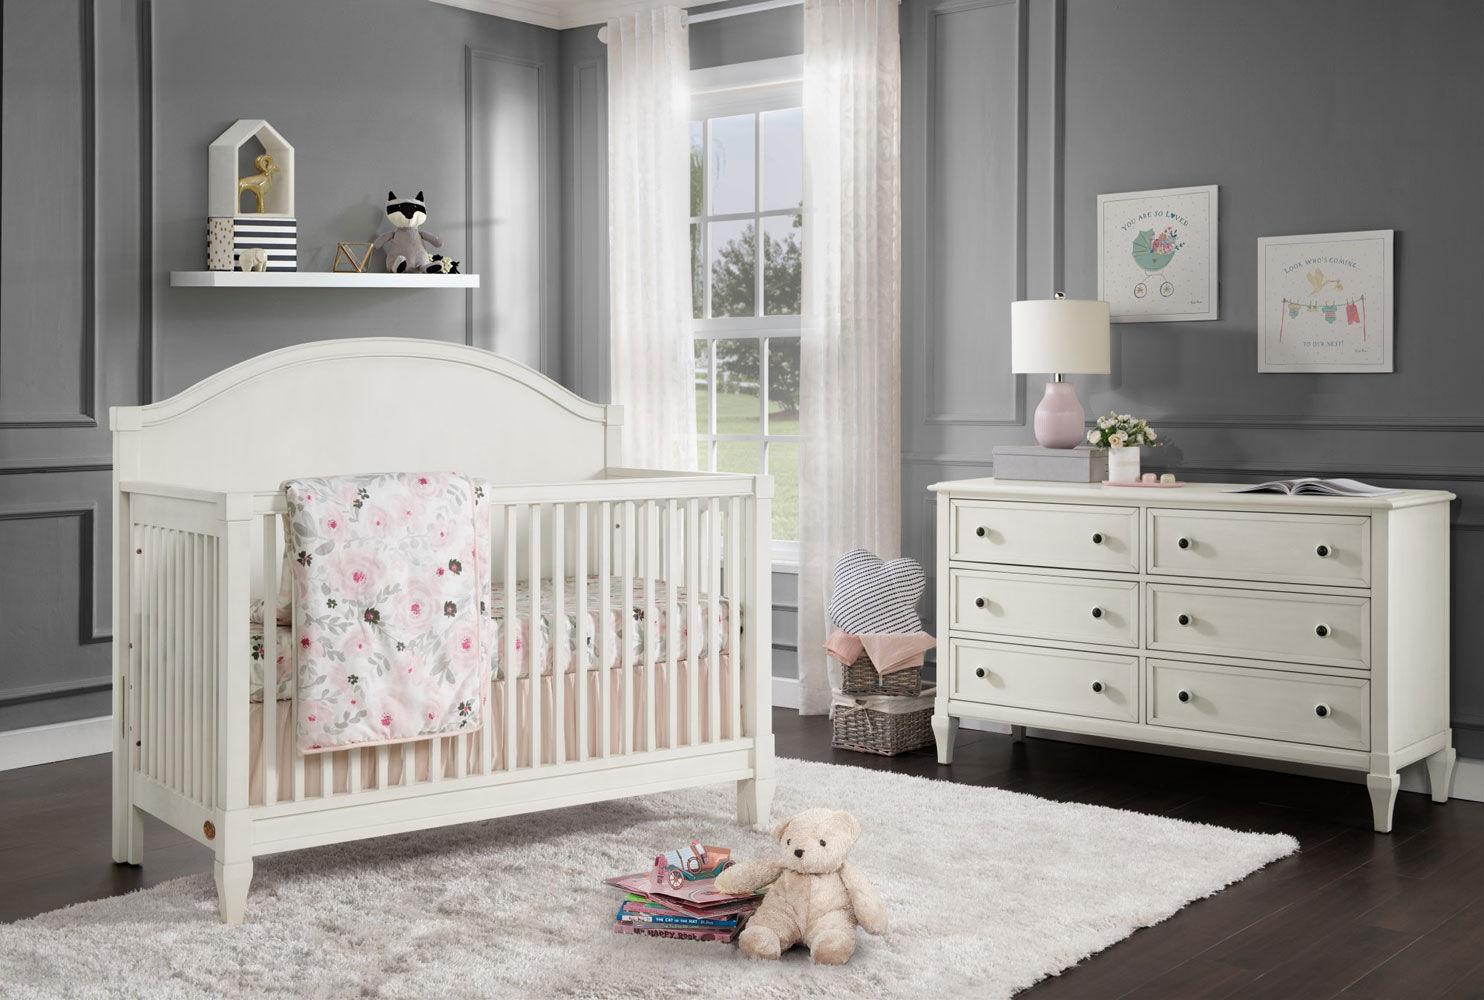 oxford baby crib